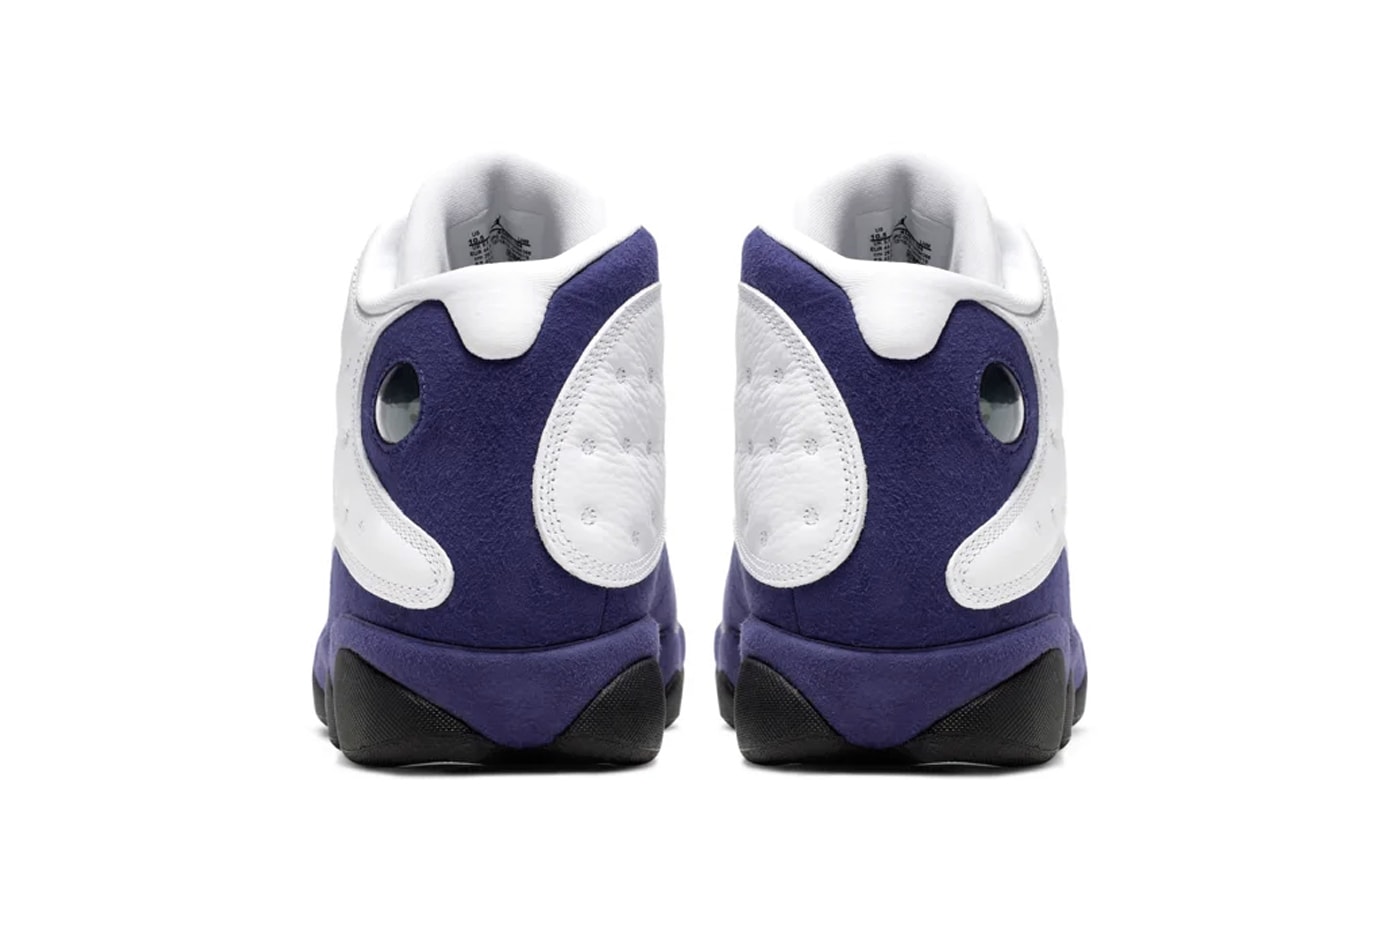 Air Jordan 13 White/Court Purple Release Info